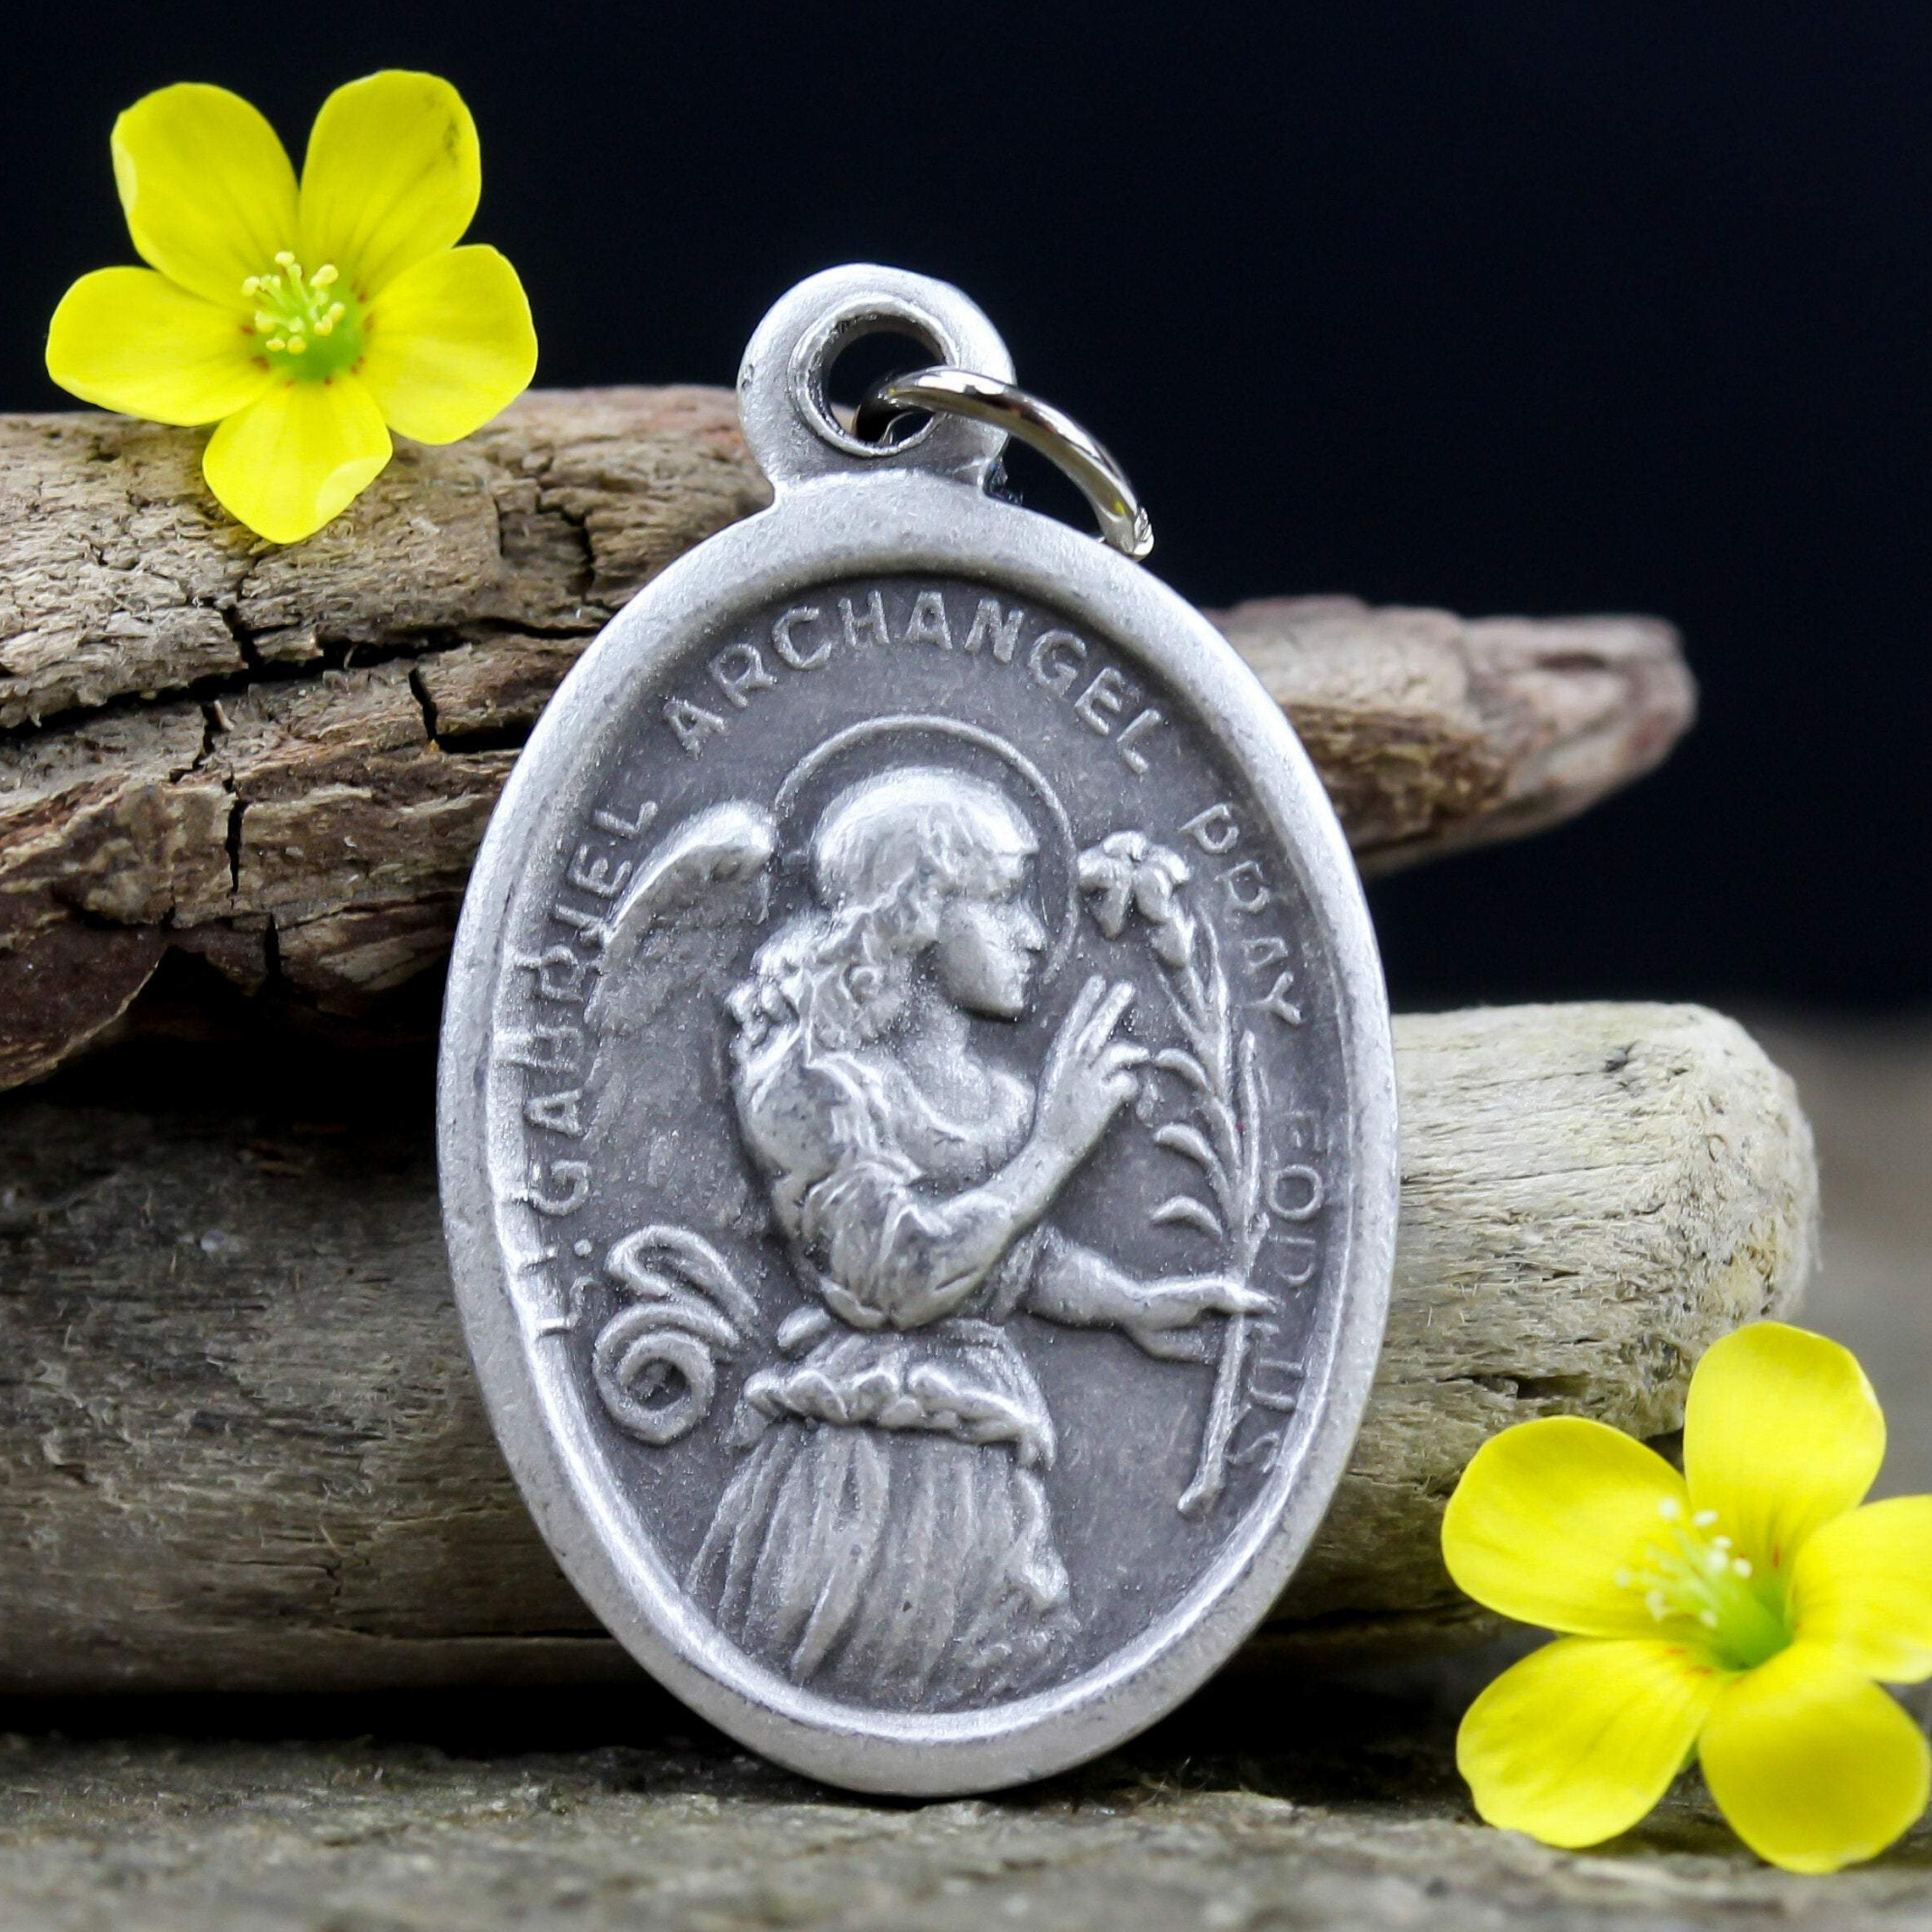 die cast silver medal depicting saint gabriel archangel